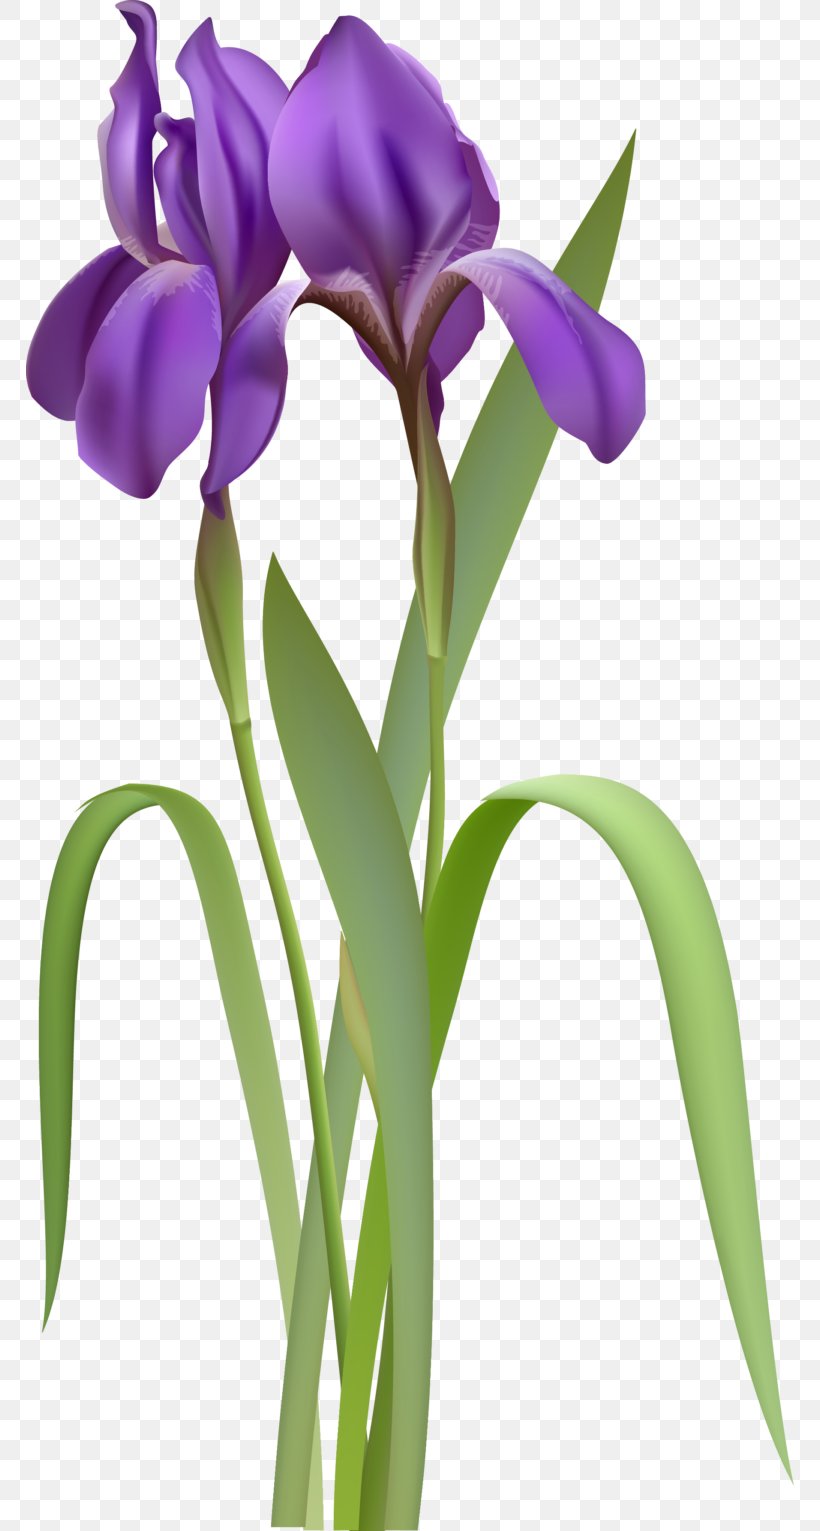 Iris Flower Data Set Clip Art, PNG, 768x1531px, Iris Flower Data Set, Cattleya, Cut Flowers, Flower, Flowering Plant Download Free